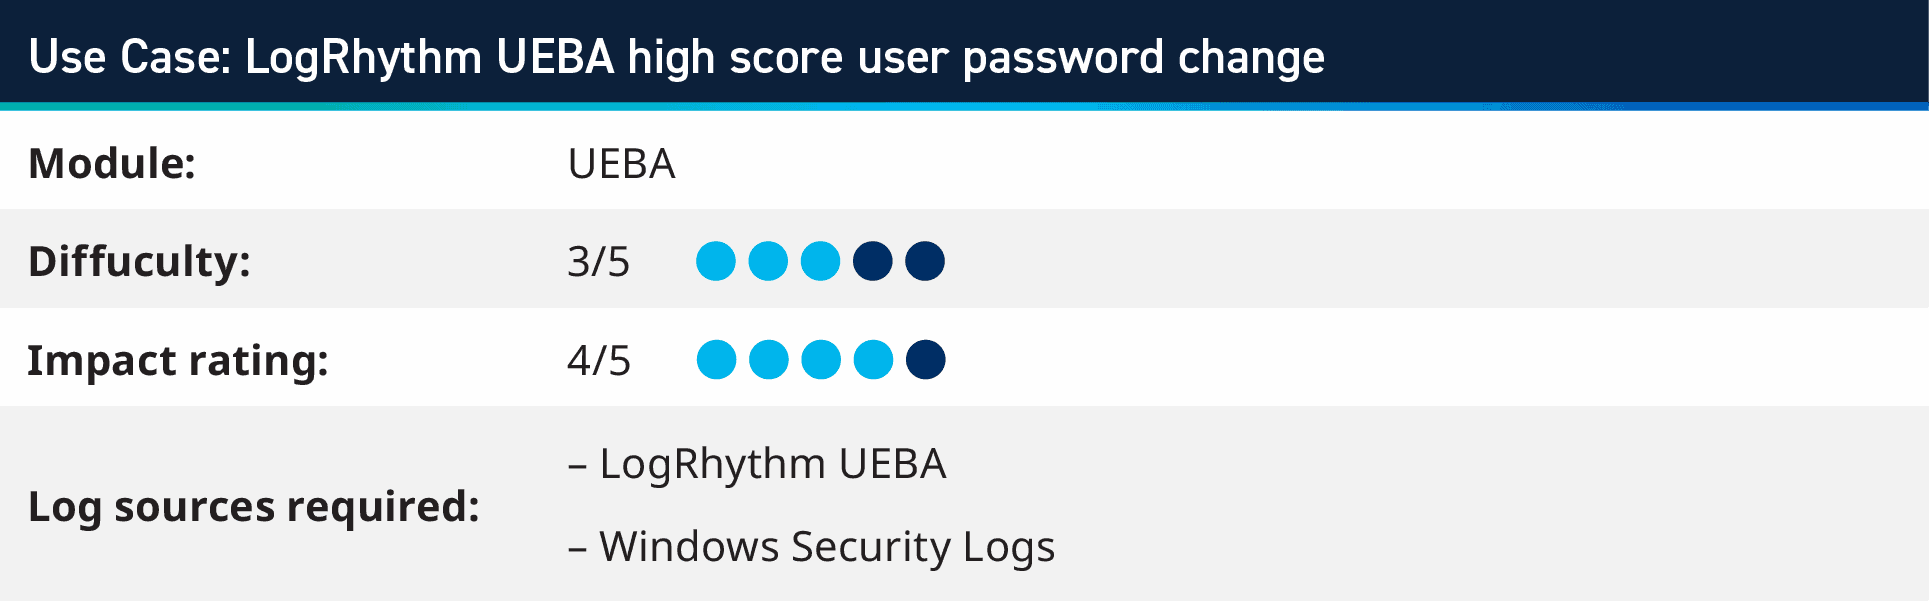 Use case: LogRhythm UEBA high score user password change